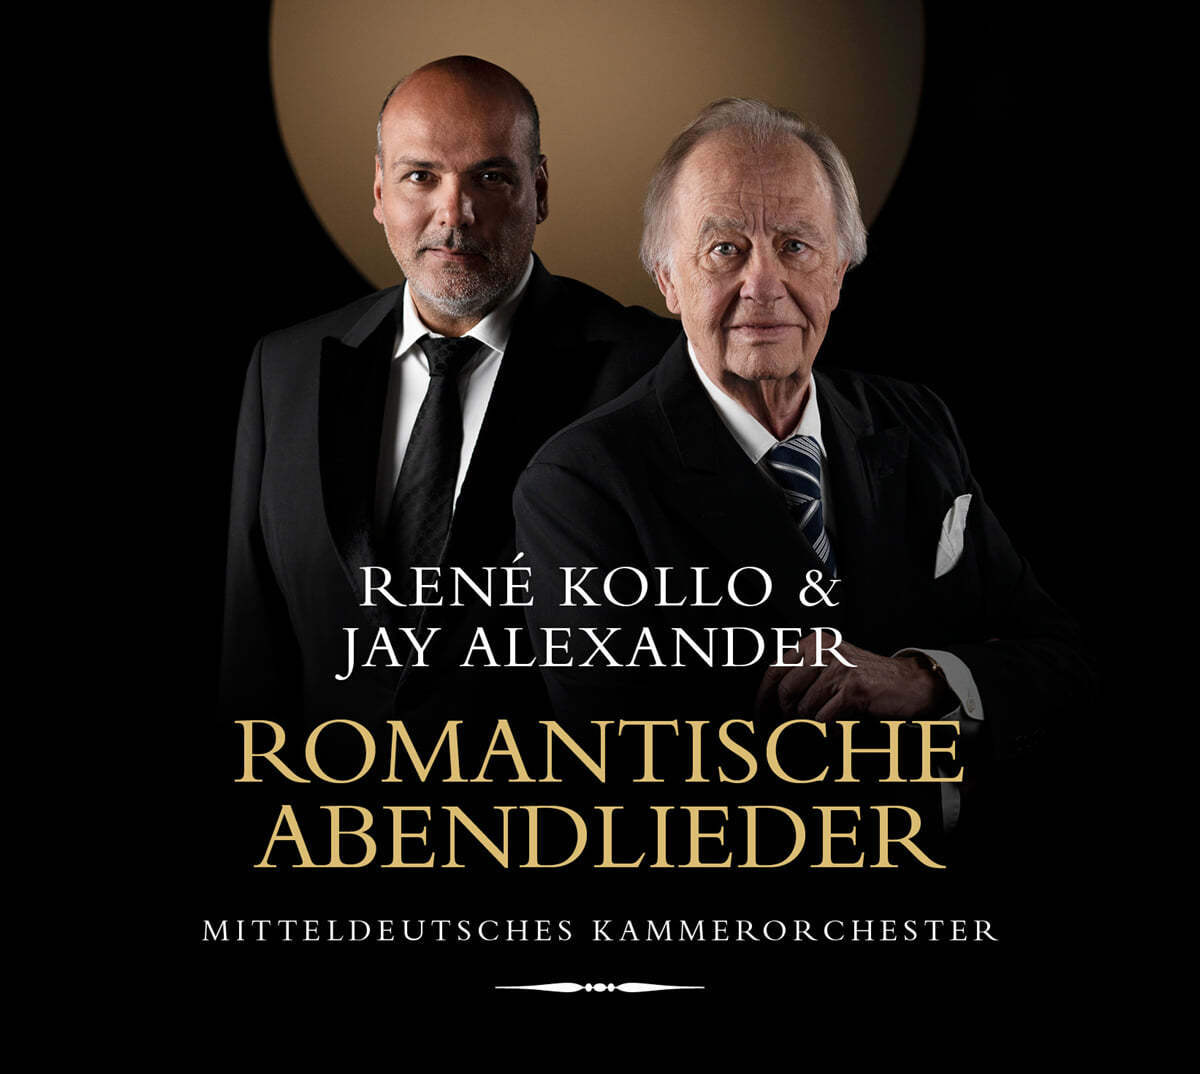 Rene Kollo / Jay Alexander 현악 앙상블 반주로 듣는 독일 낭만 가곡 (Romantische Abendlieder) 